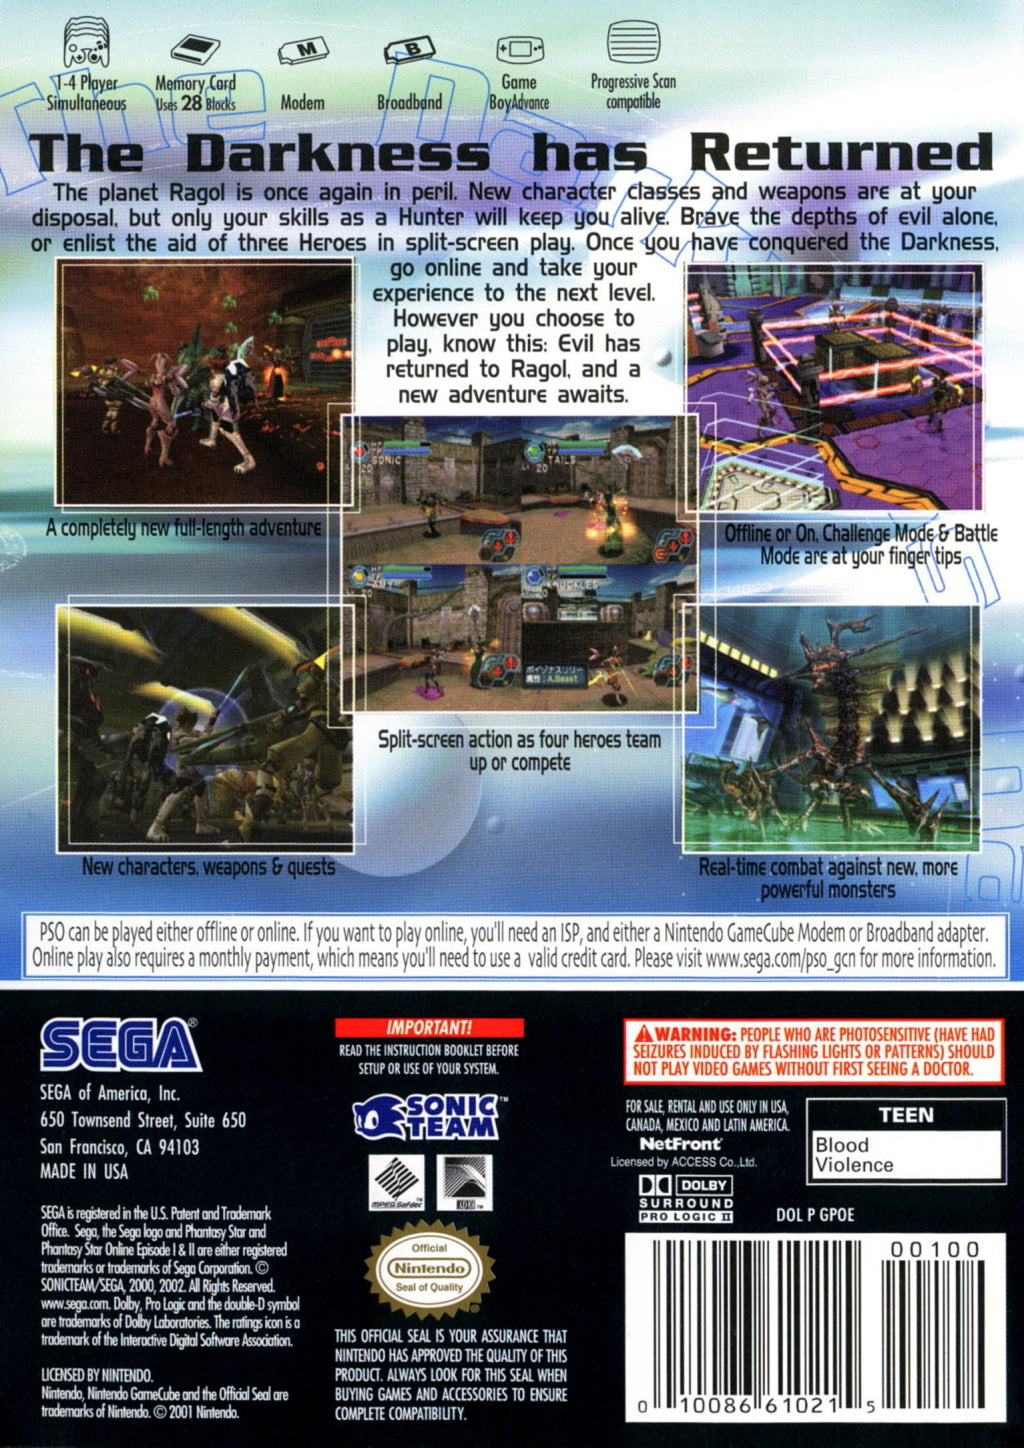 Phantasy Star Online Episode I & II - (GC) GameCube [Pre-Owned] Video Games SEGA   